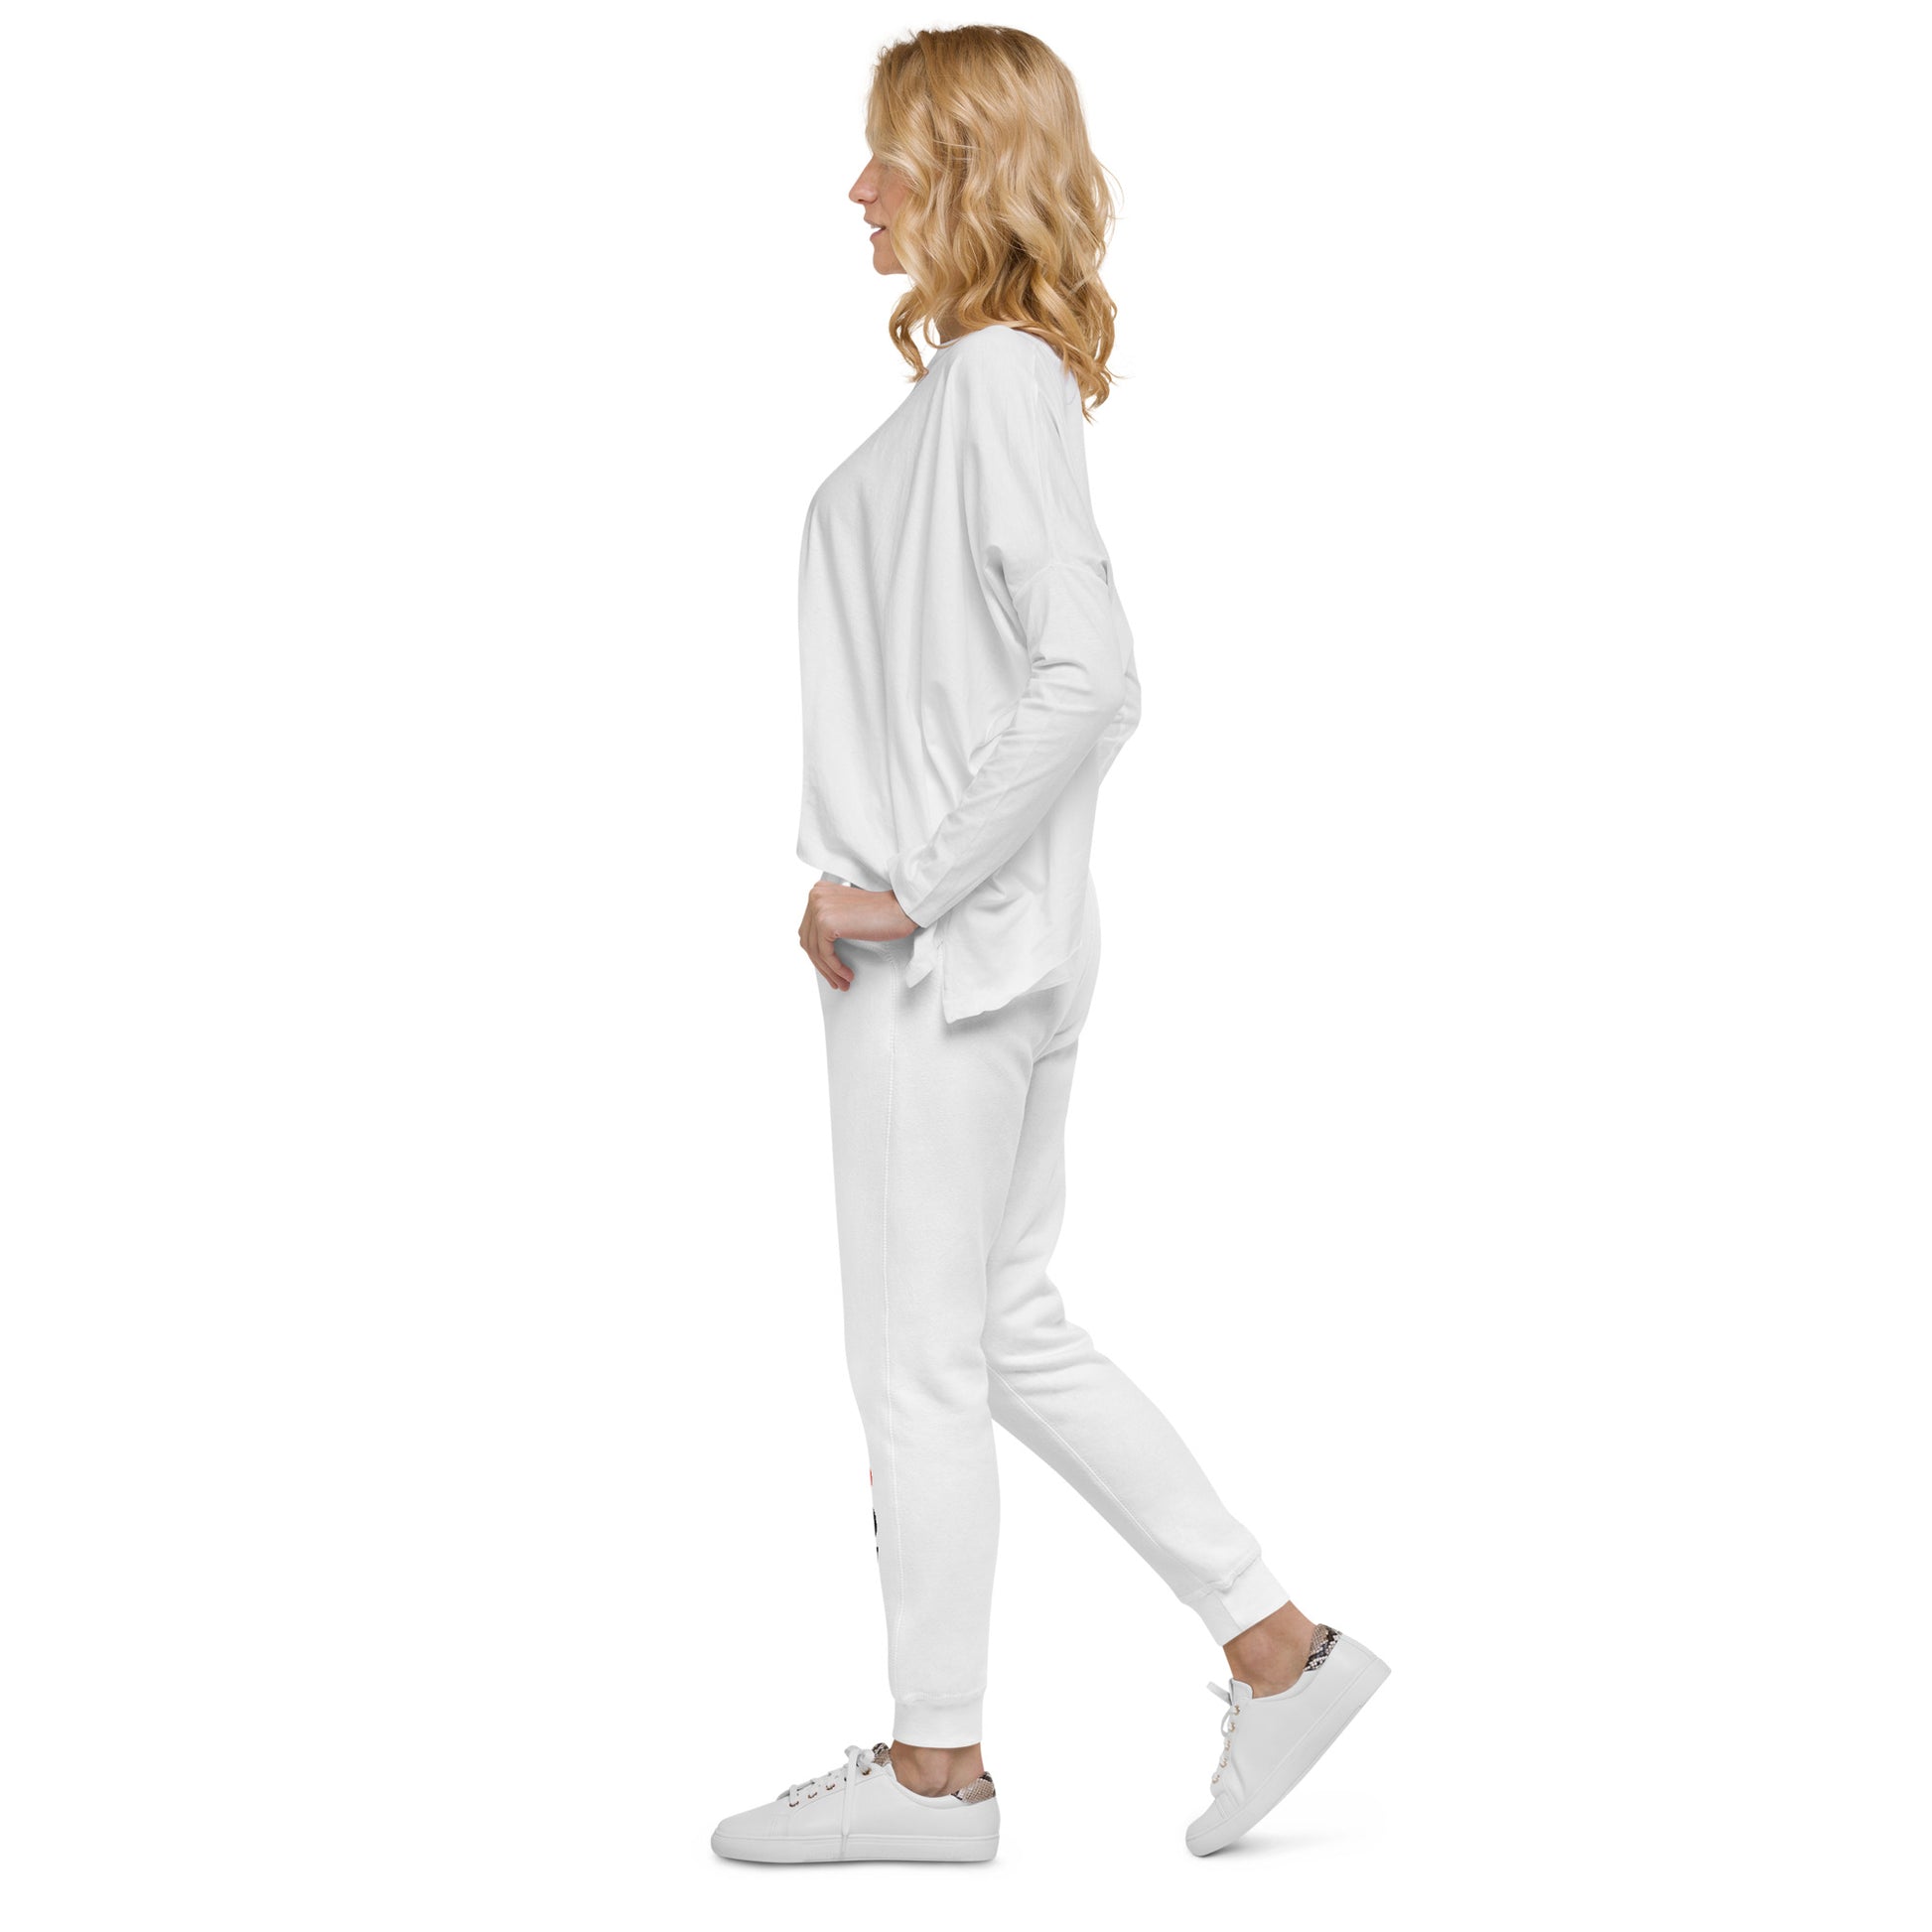 I LOVE TOFU Vegan Unisex fleece sweatpants created by White Buffalo Vegan Apparel